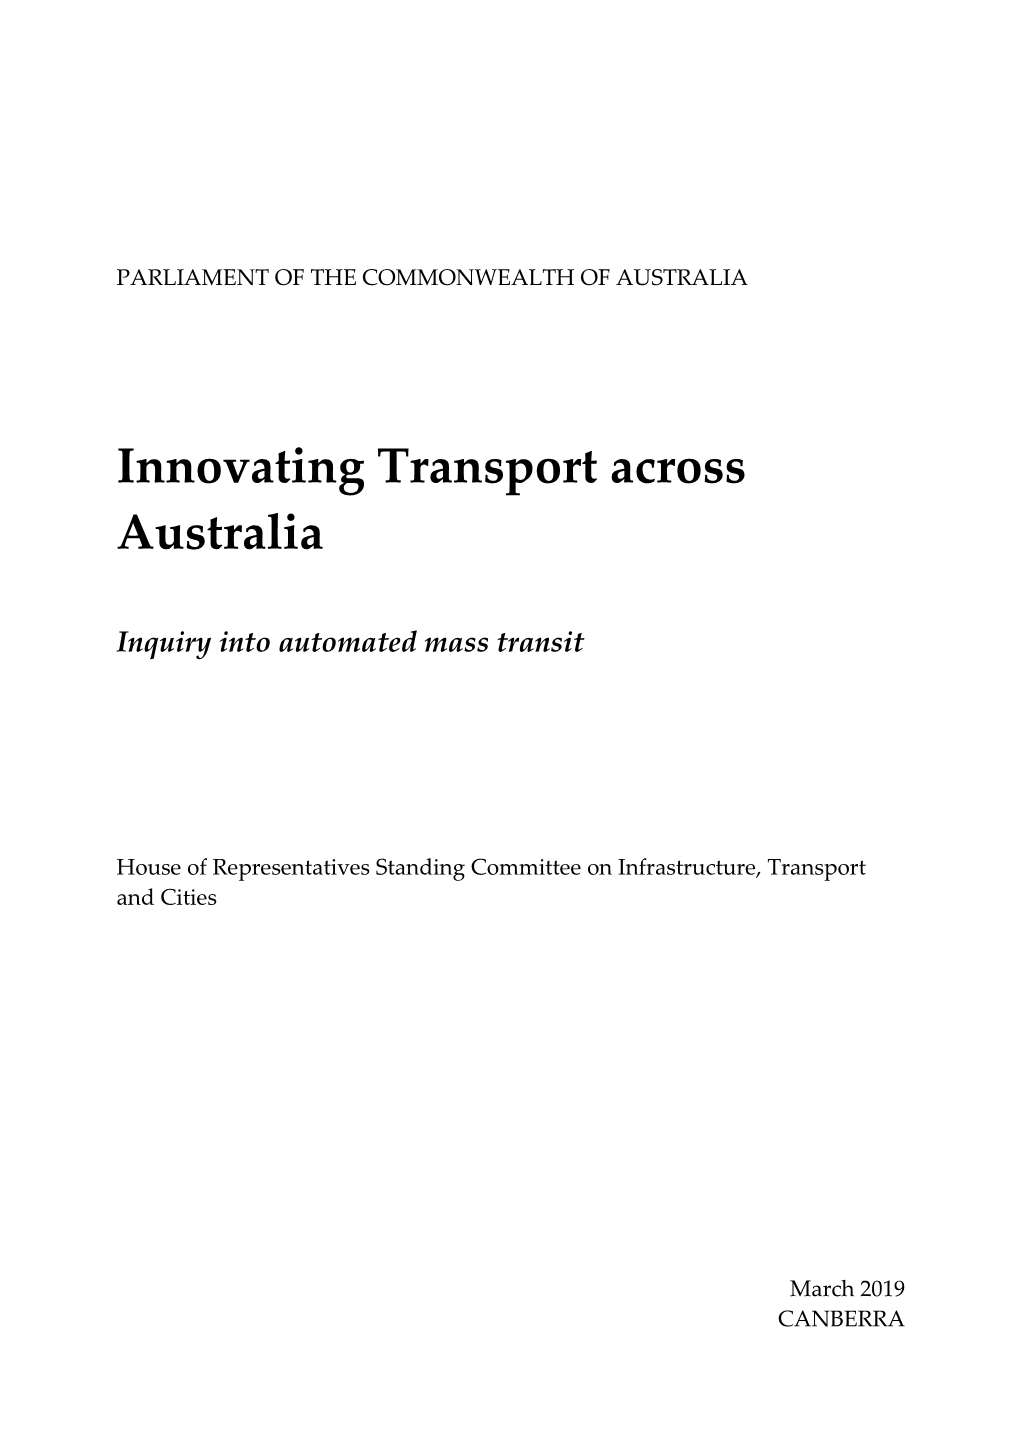 Innovating Transport Across Australia